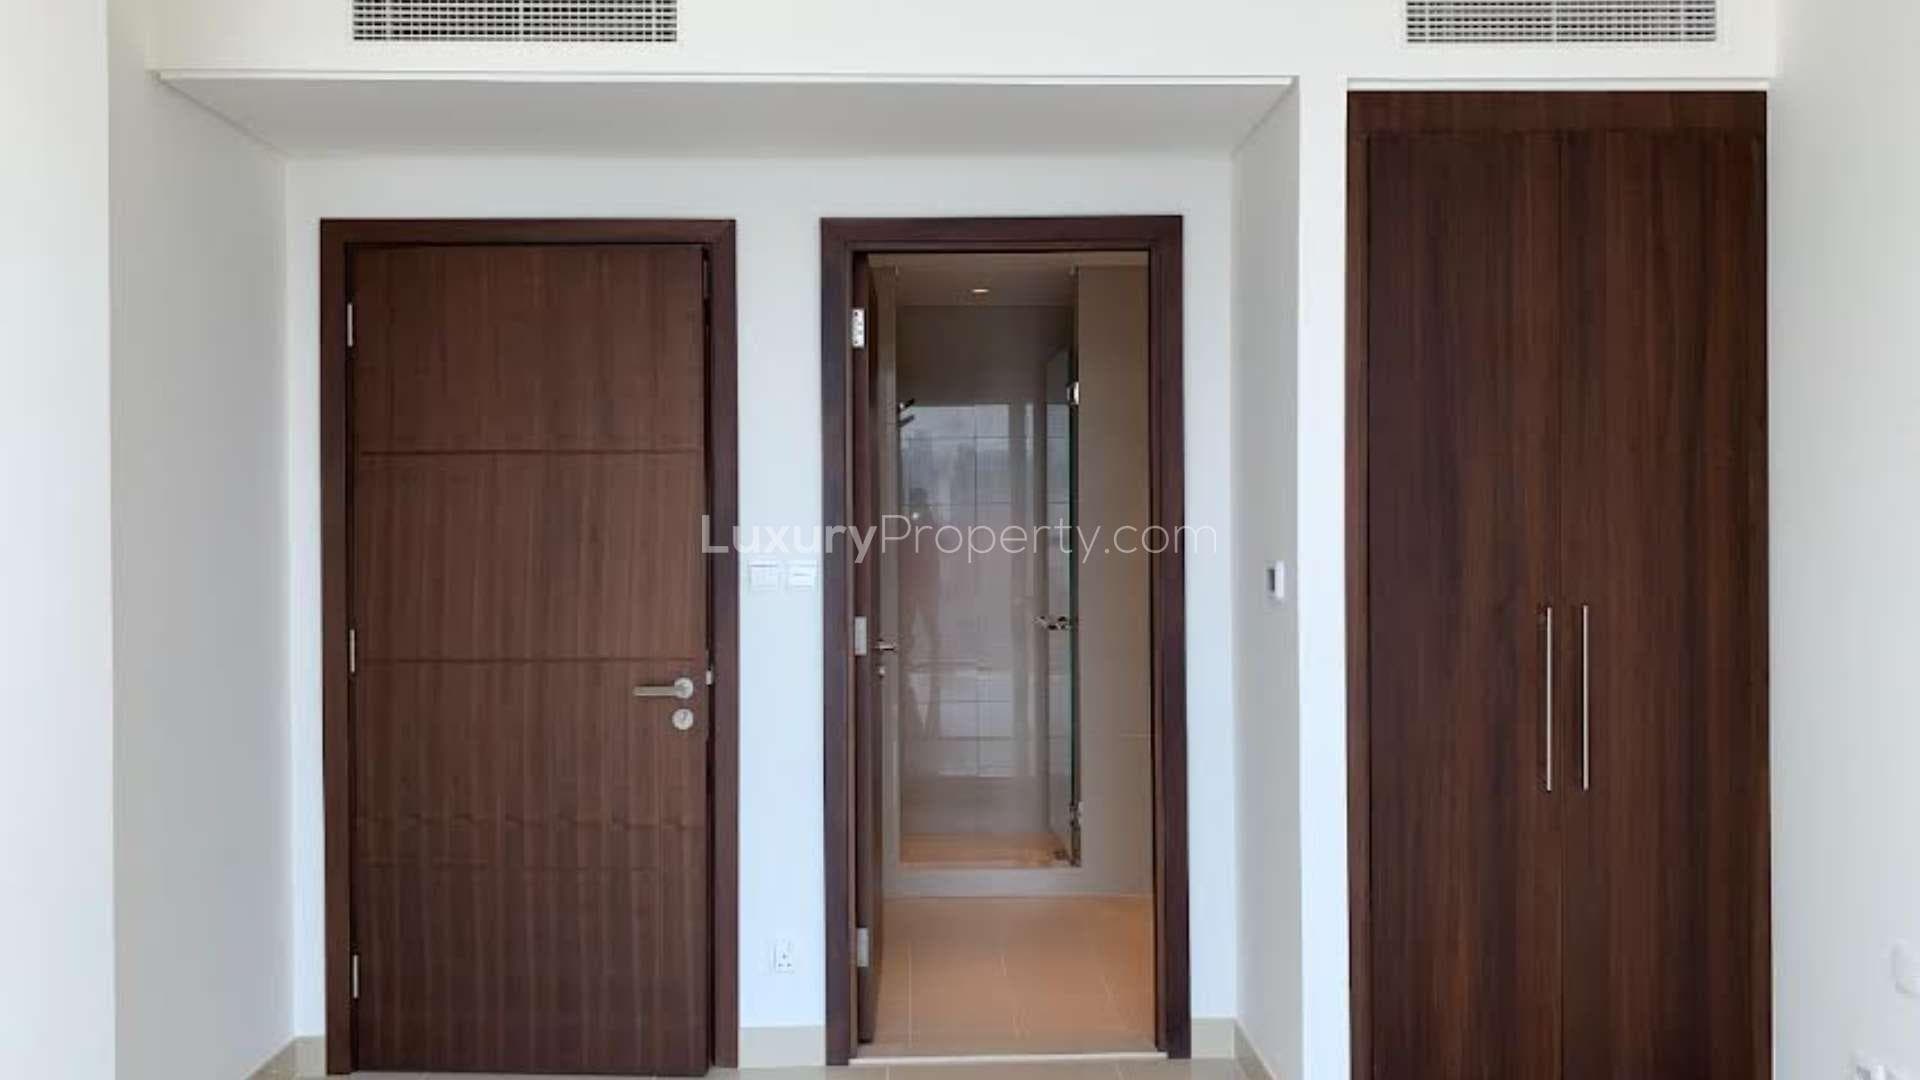 3 Bedroom Apartment For Sale Arabella Townhouses 2 Lp34854 1422ba72c89a9800.jpg